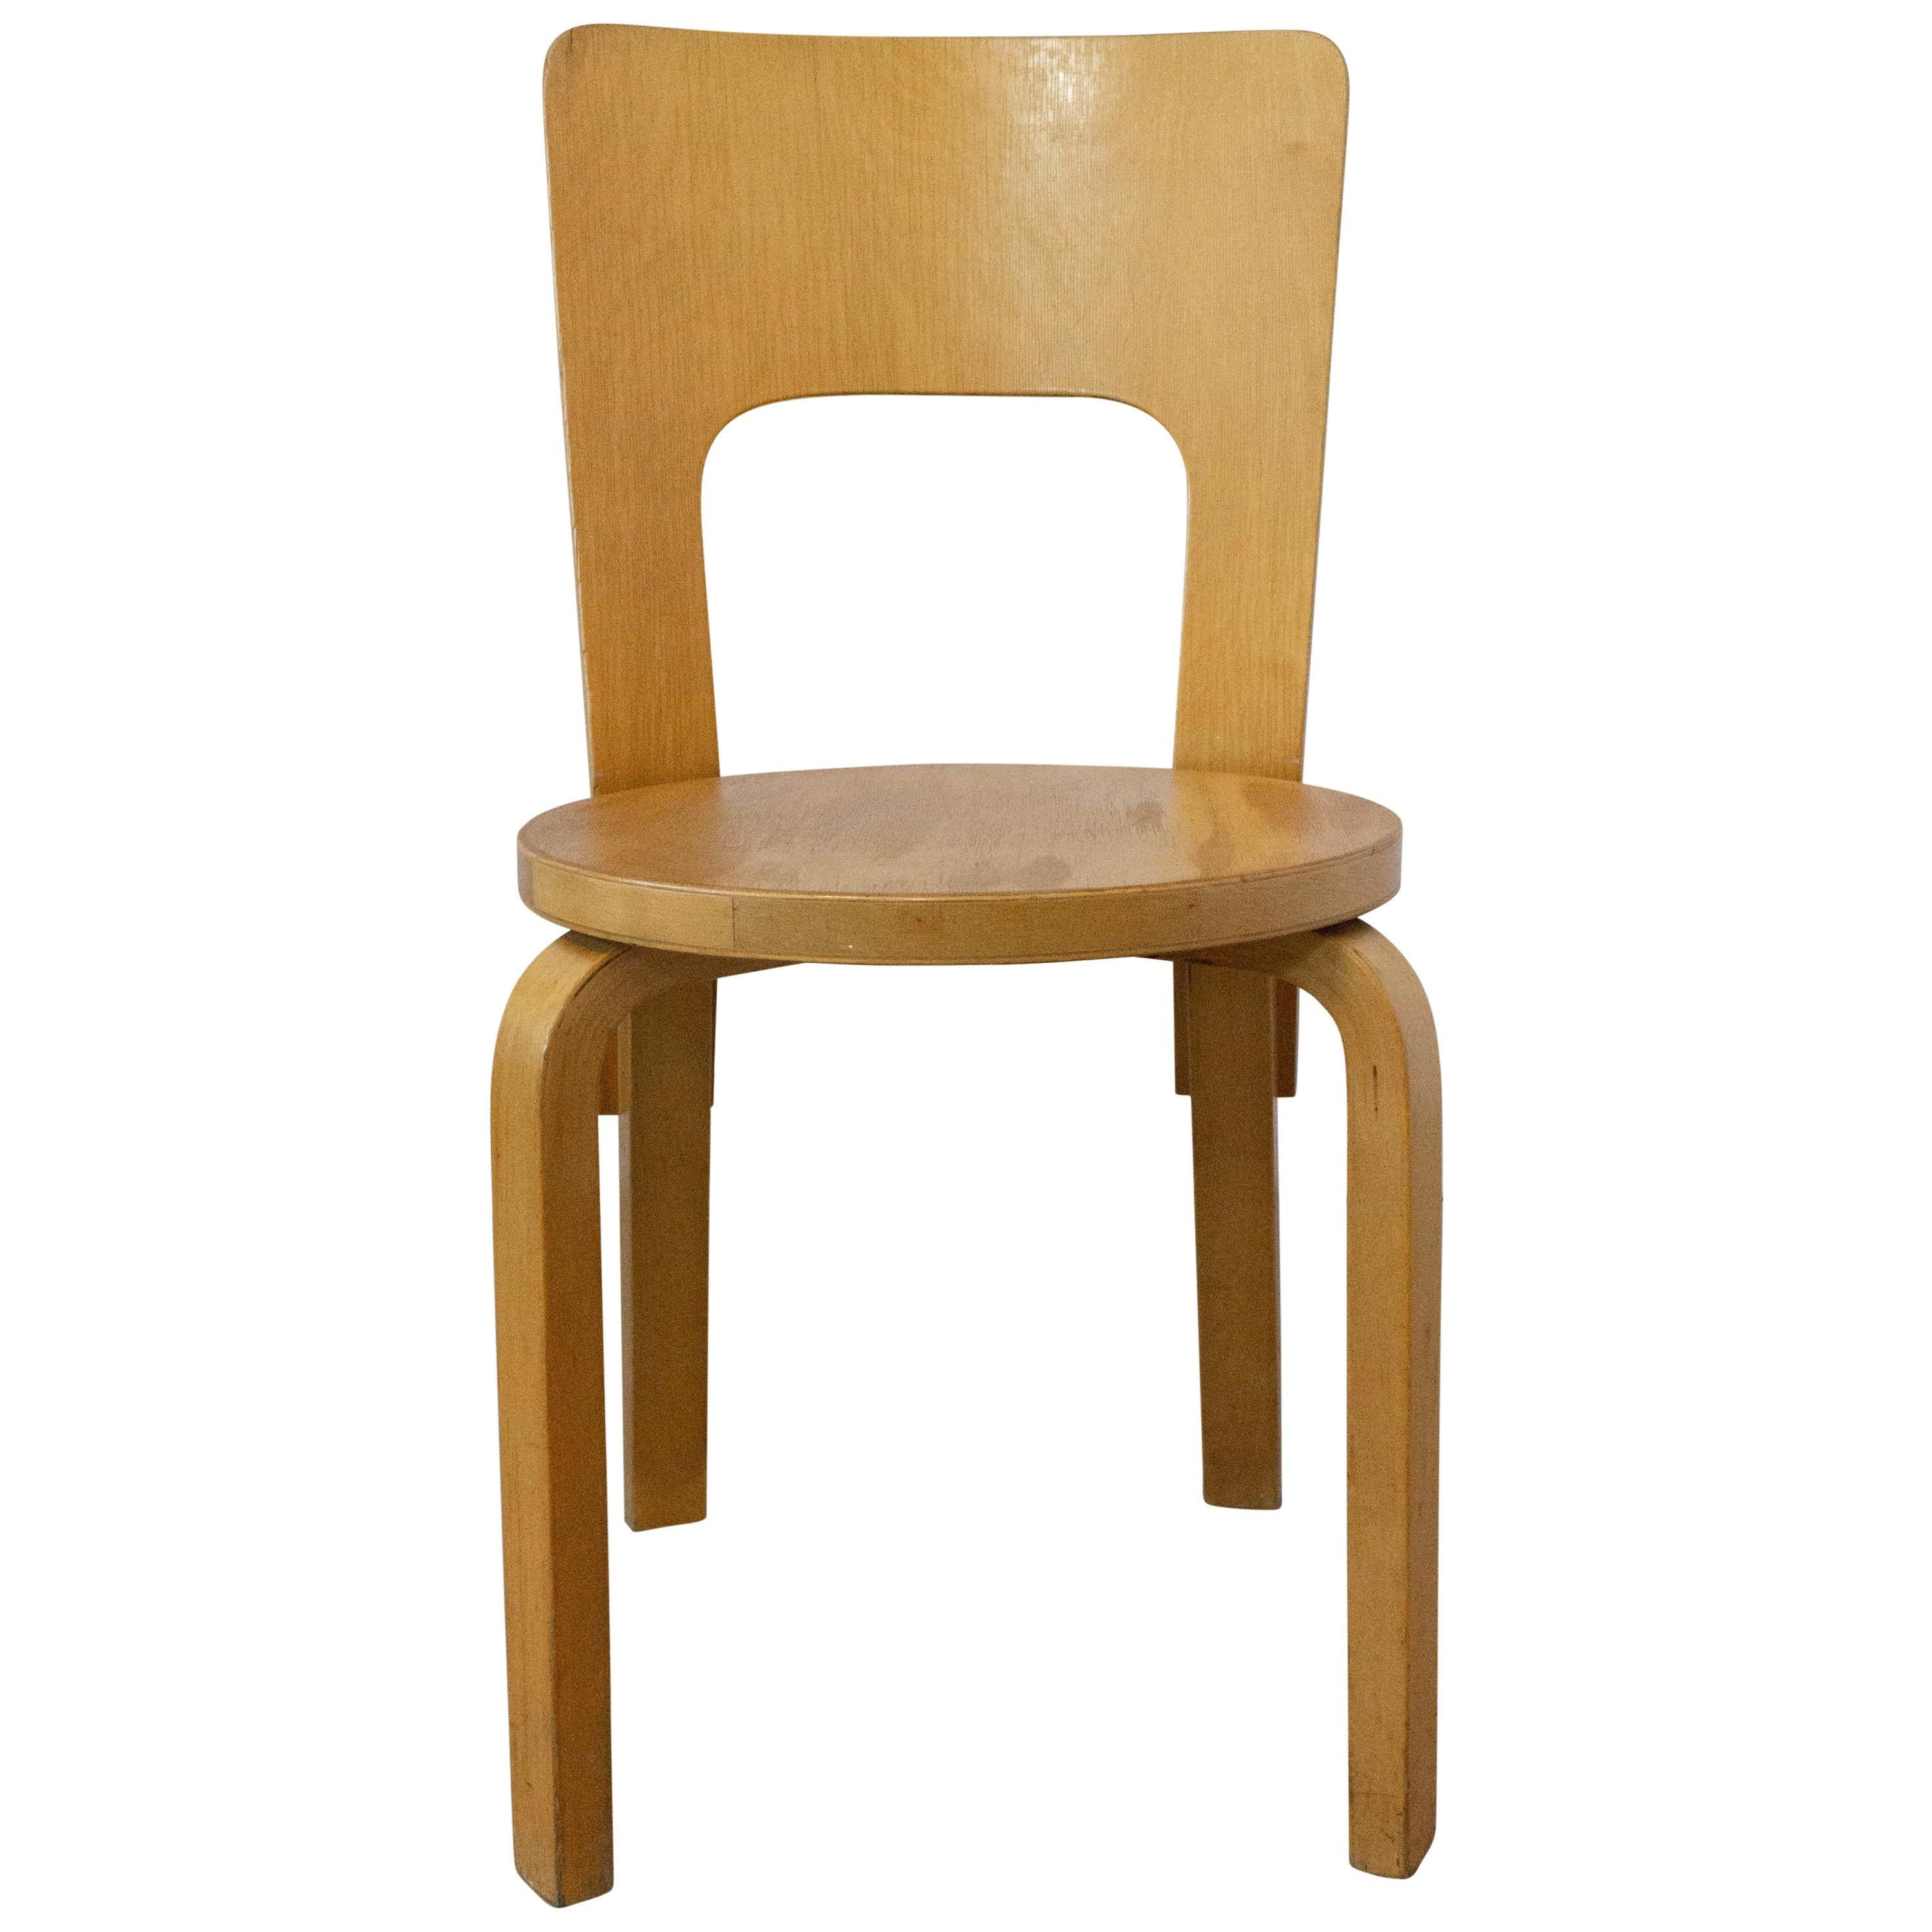 Finnish Vintage Wood Chair Alvar Aalto Model 66, circa 1930 For Sale